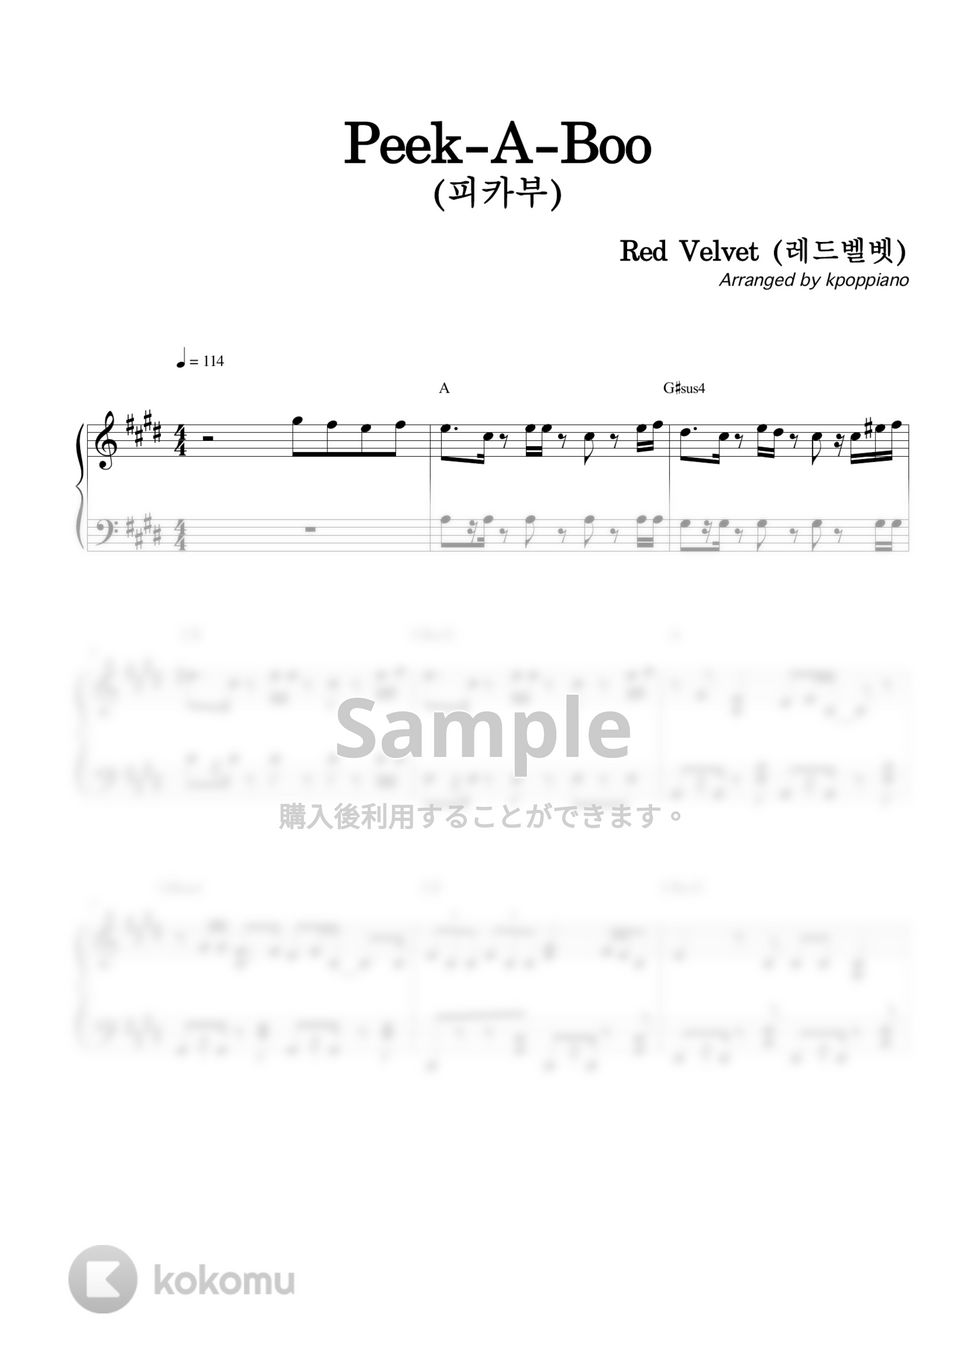 Red Velvet - ピカブー (Peek-A-Boo) by KPOP PIANO